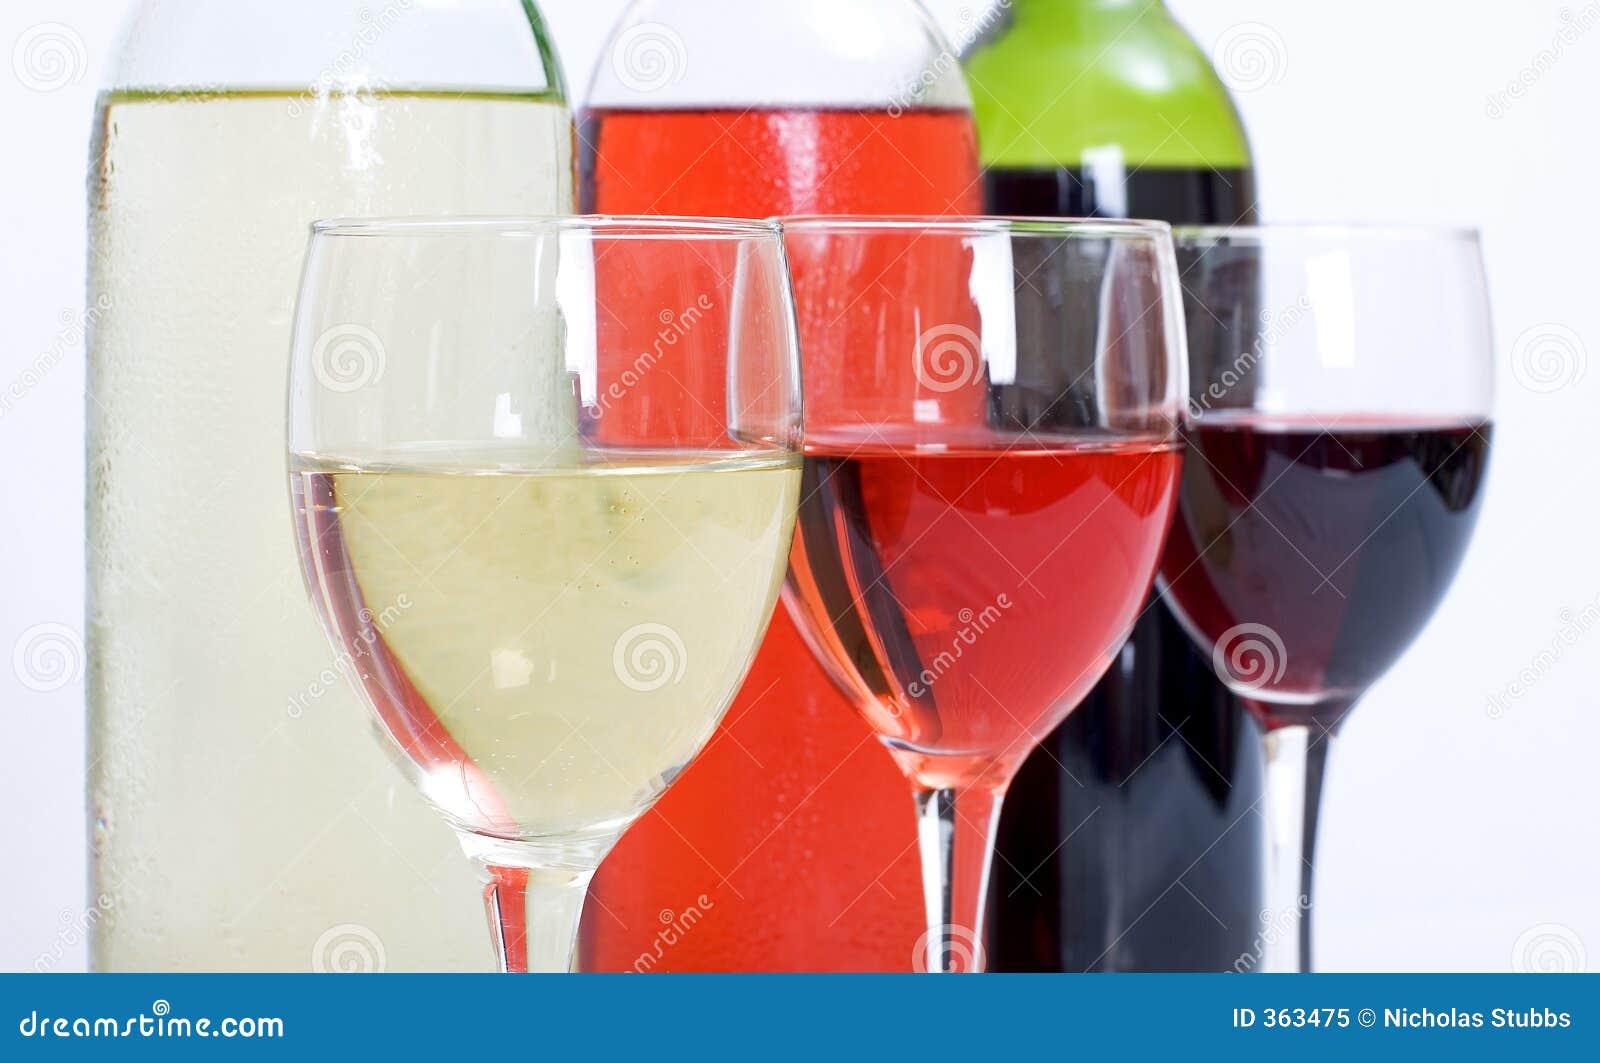 3 wine bottles and glasses